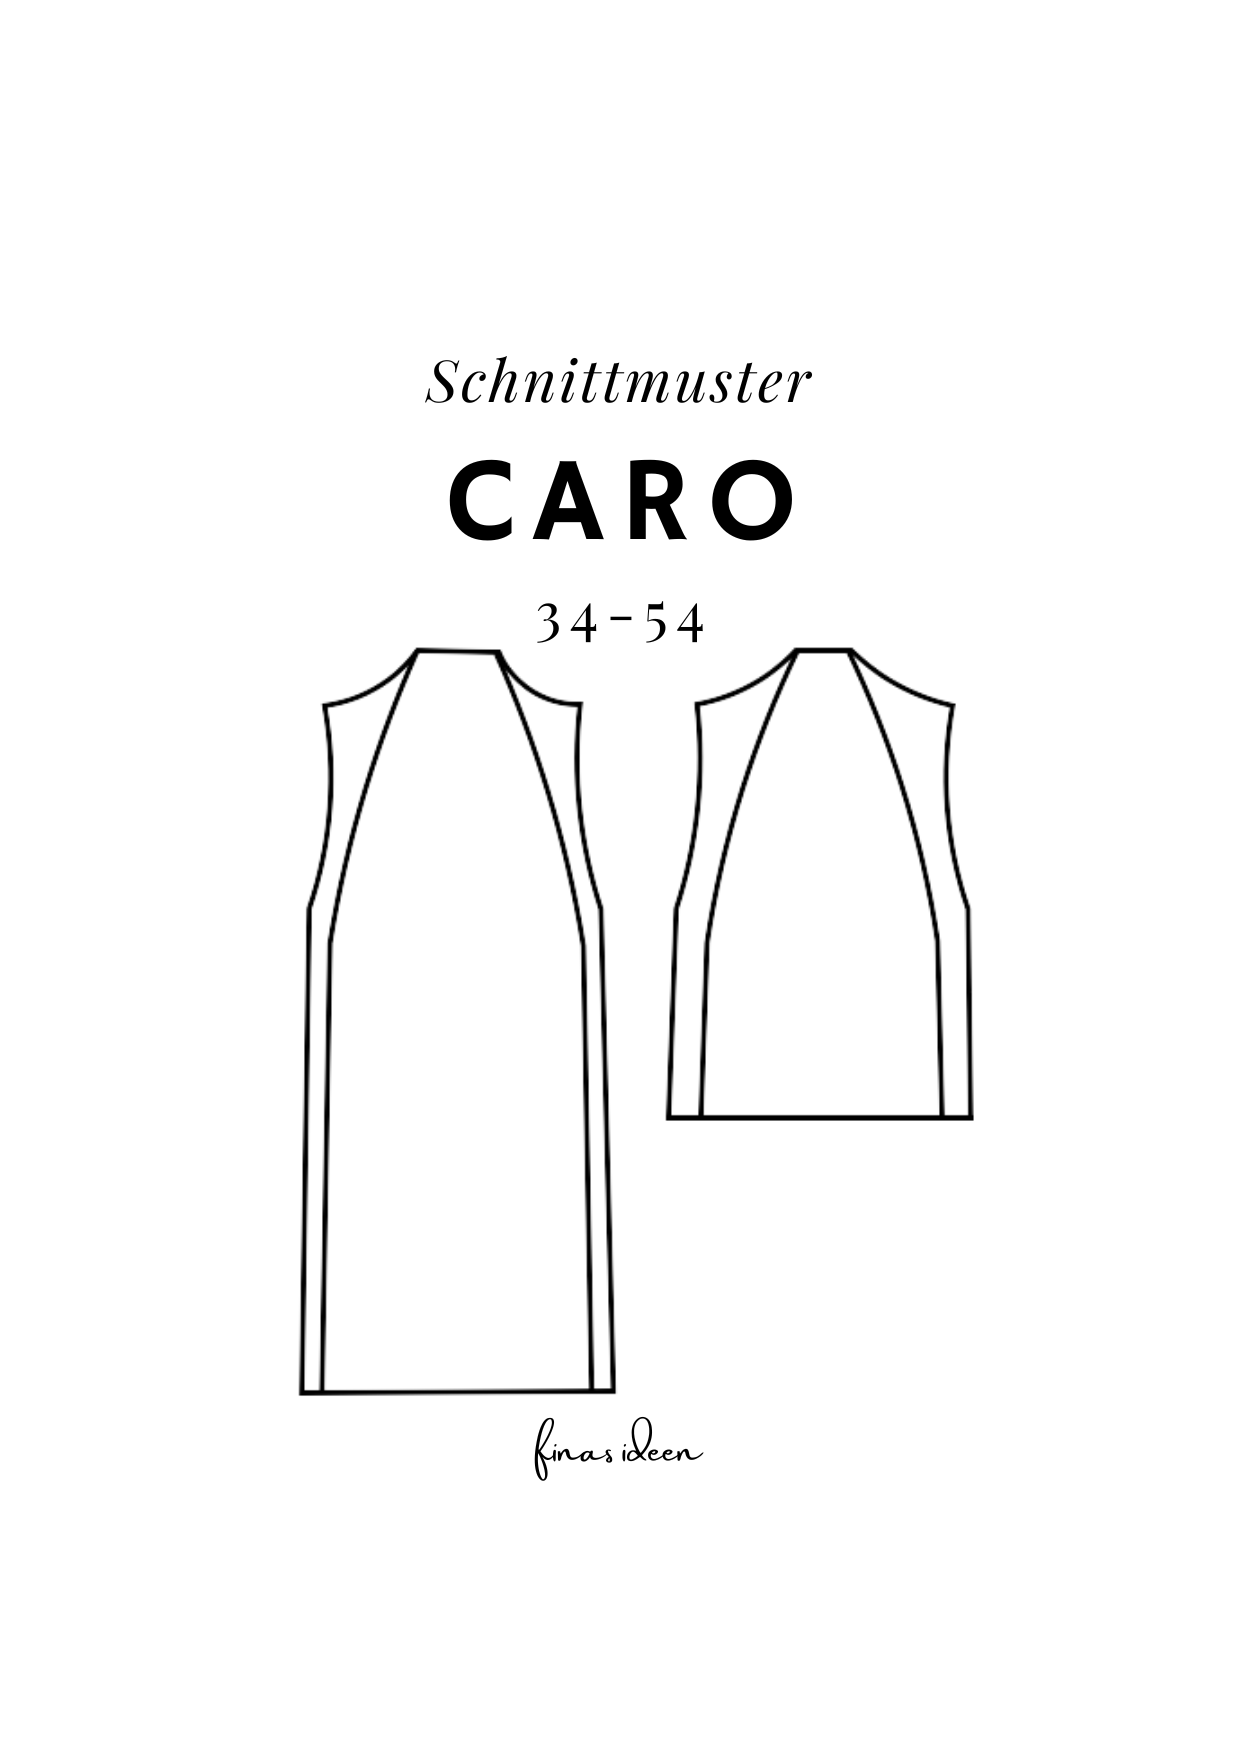 Schnittmuster-Pullunder-Kleid Caro-FinasIdeen